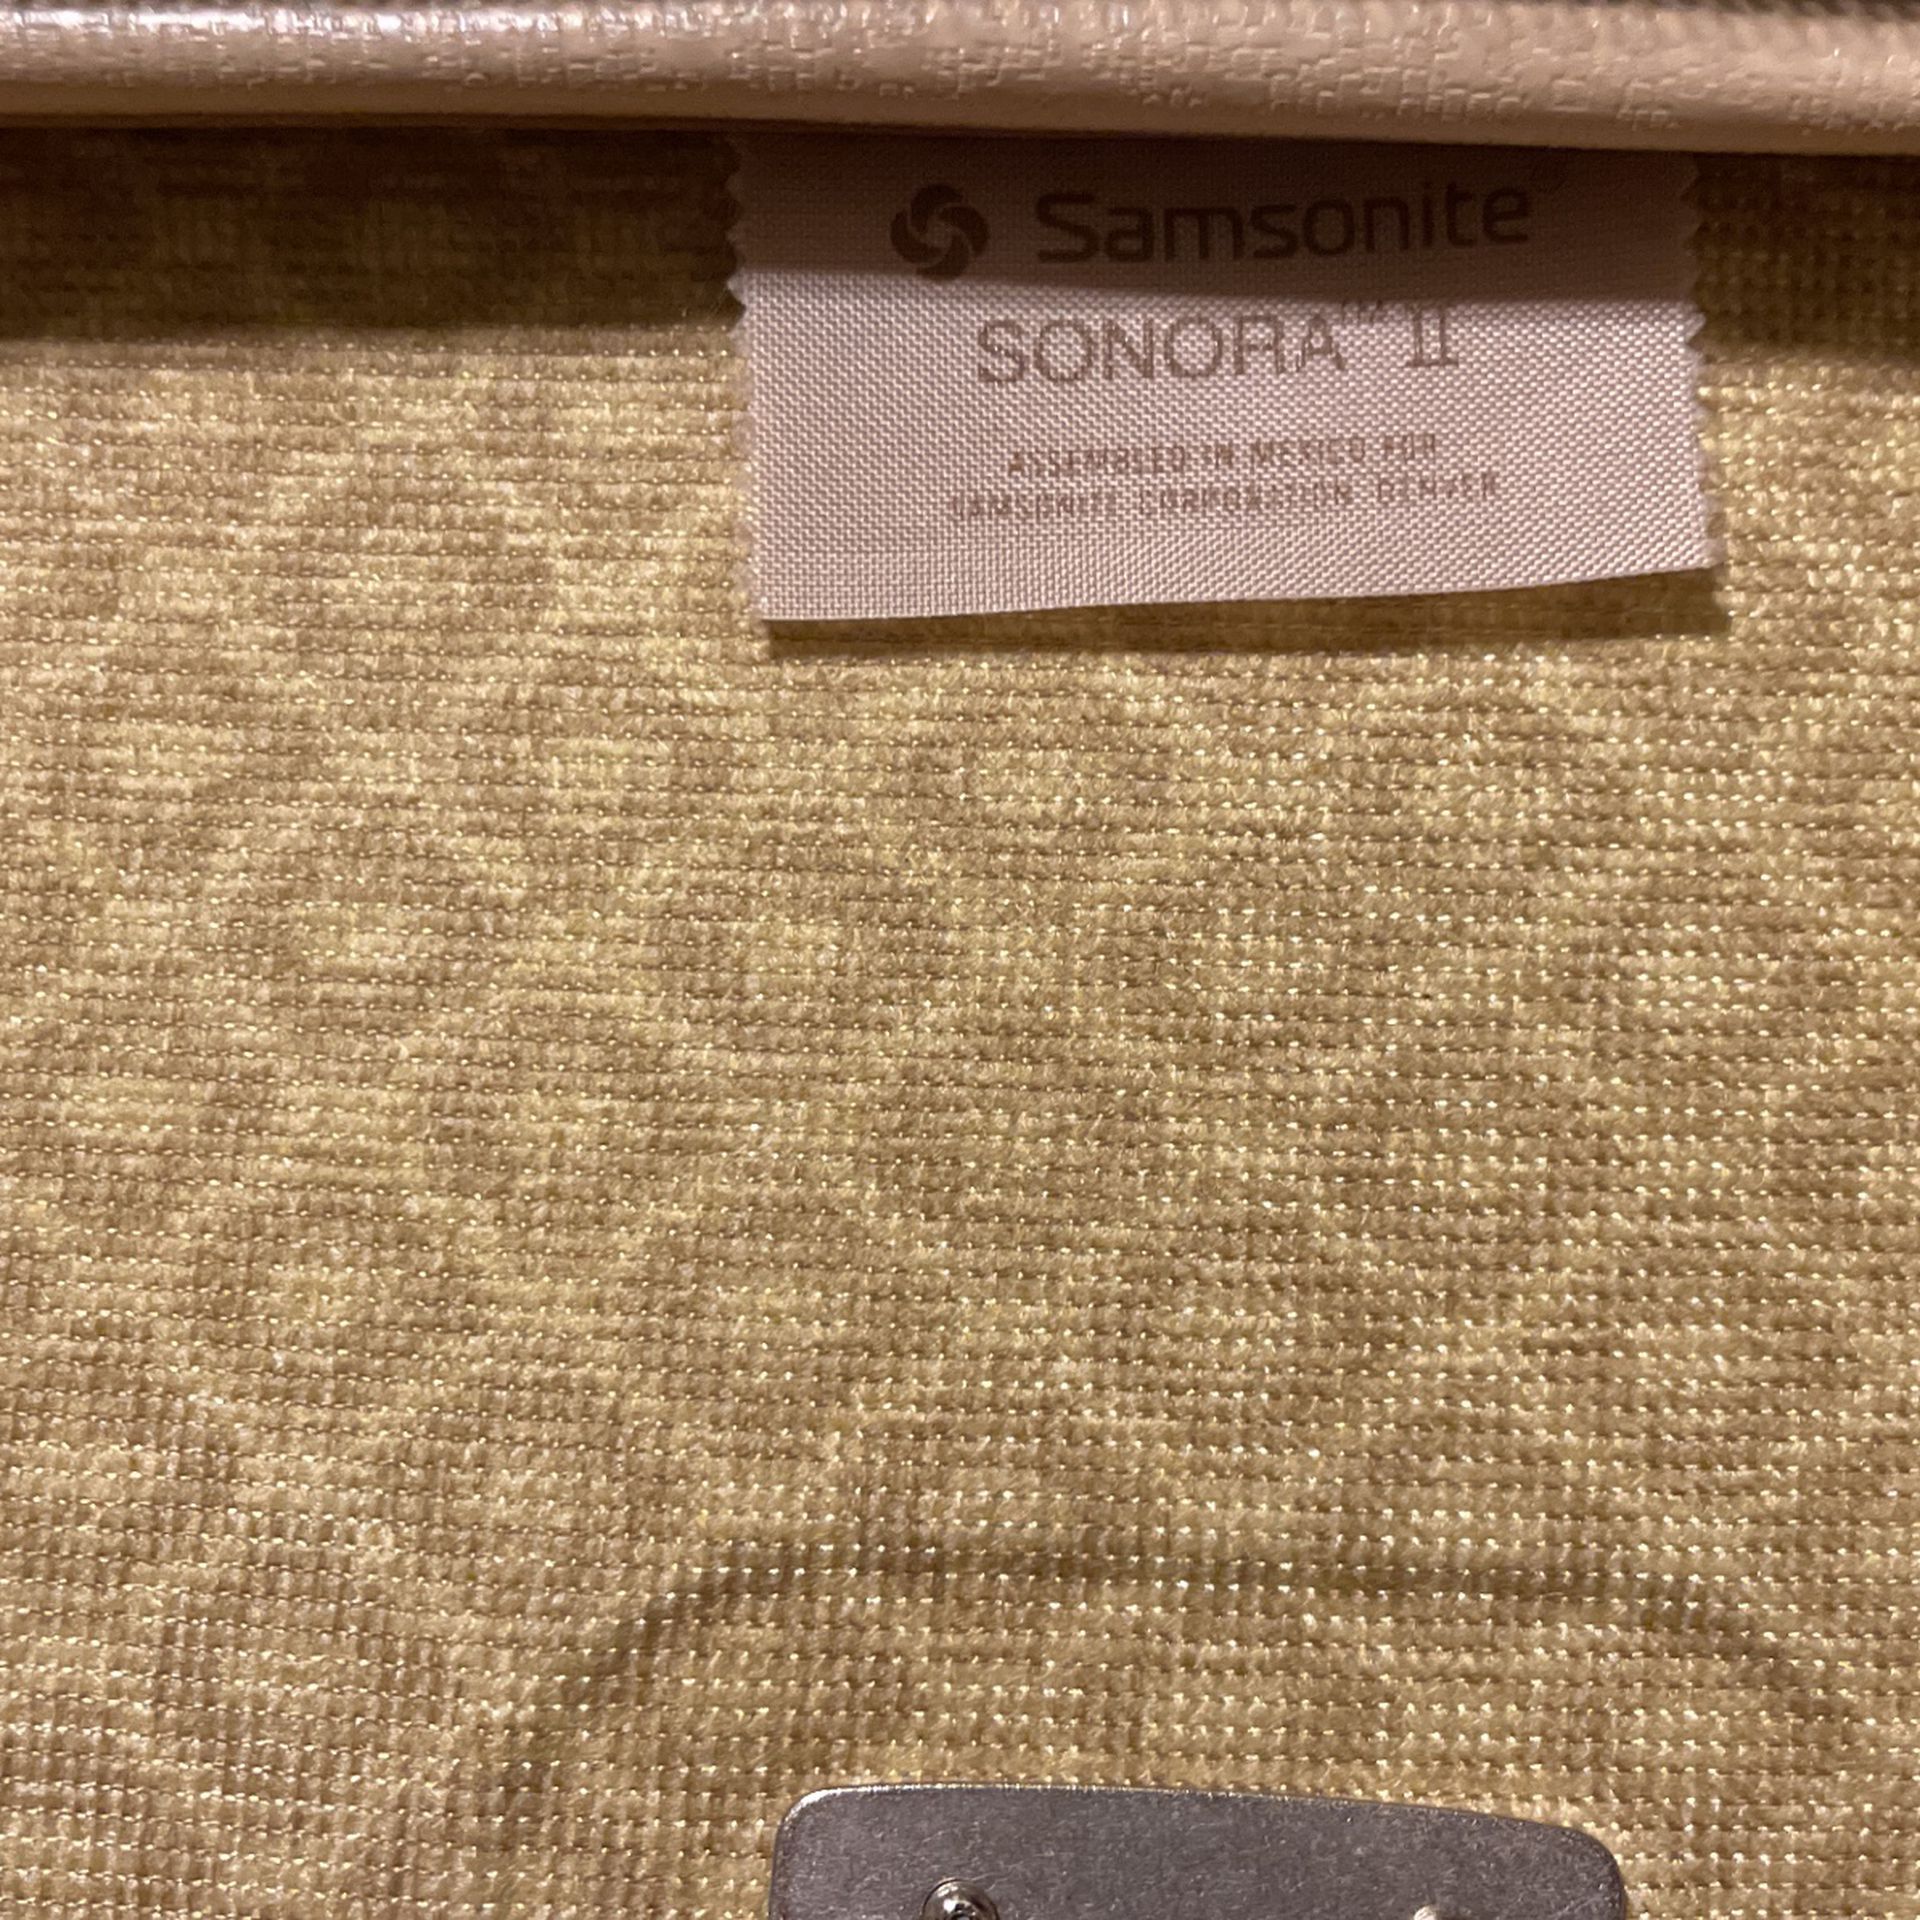 Vintage 1970s SAMSONITE Sonora II Brown Leather Carry On Bag Luggage 